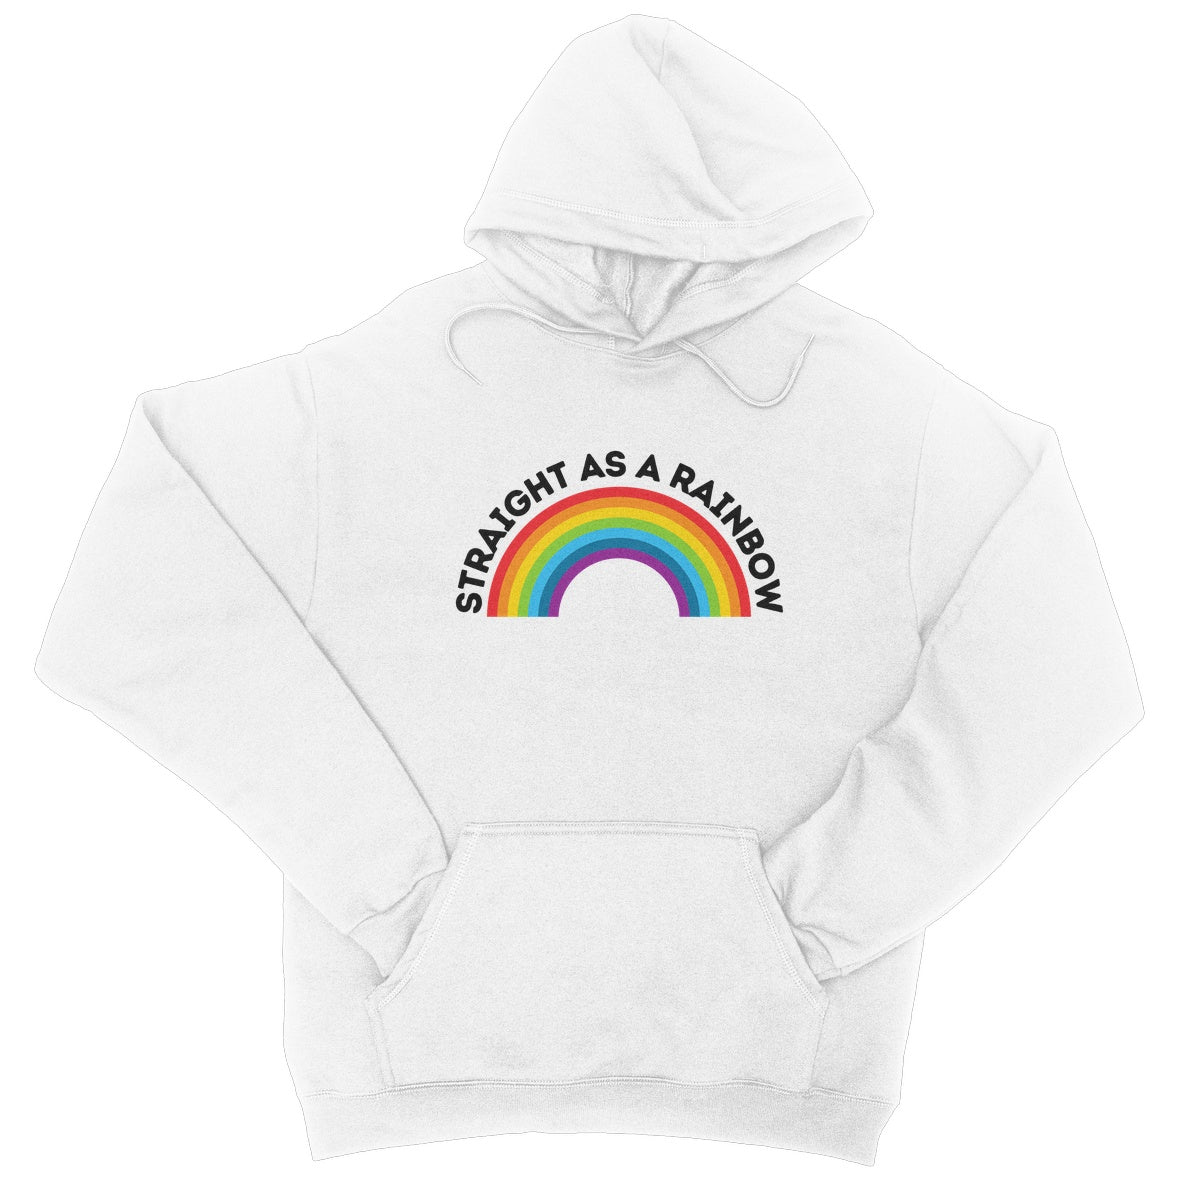 straight as a rainbow hoodie white